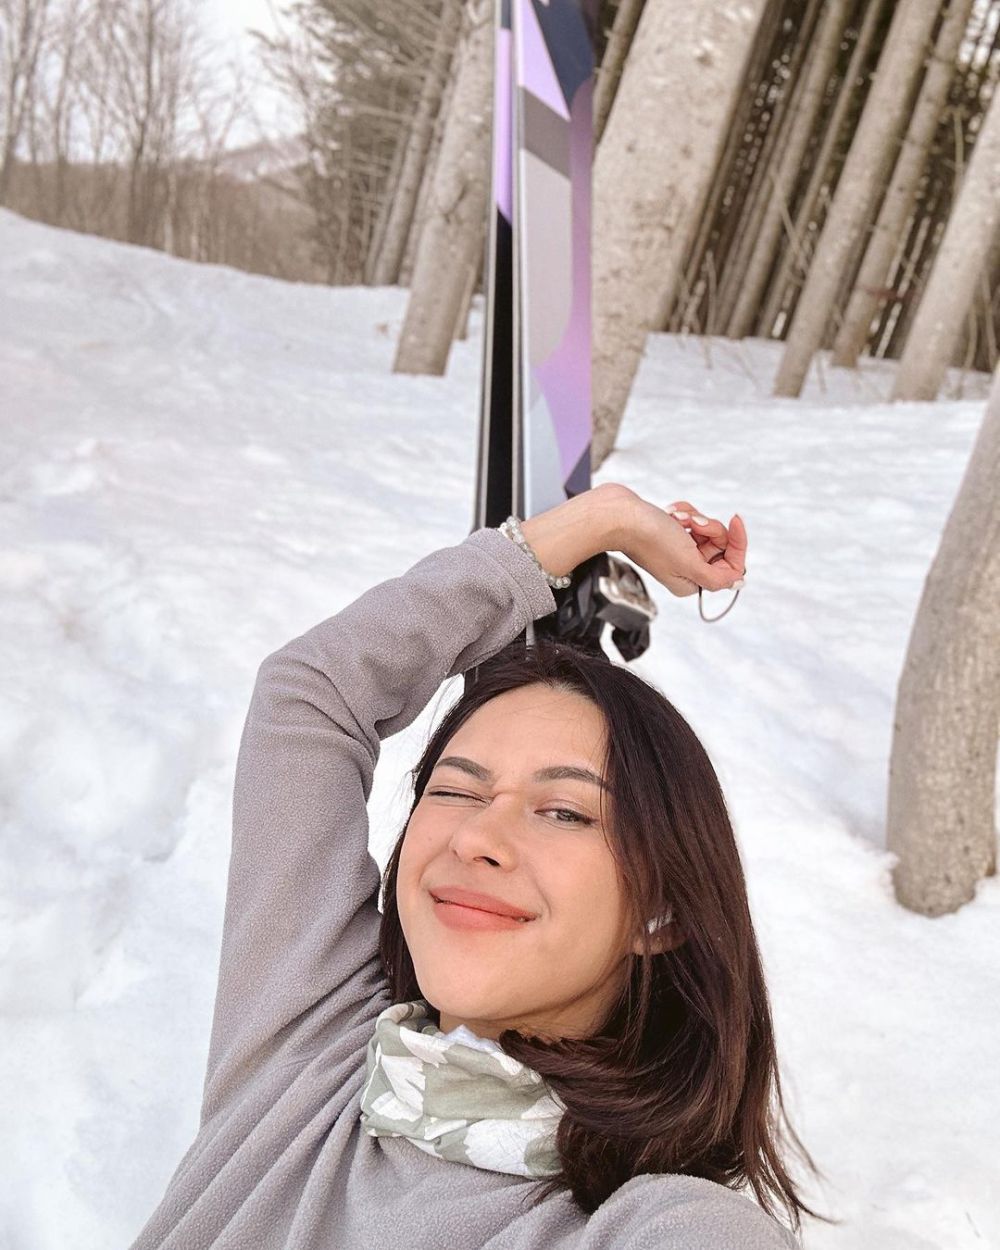 10 Momen Nana Mirdad Main Ski di Jepang, Pakai Tanktop di Tengah Salju